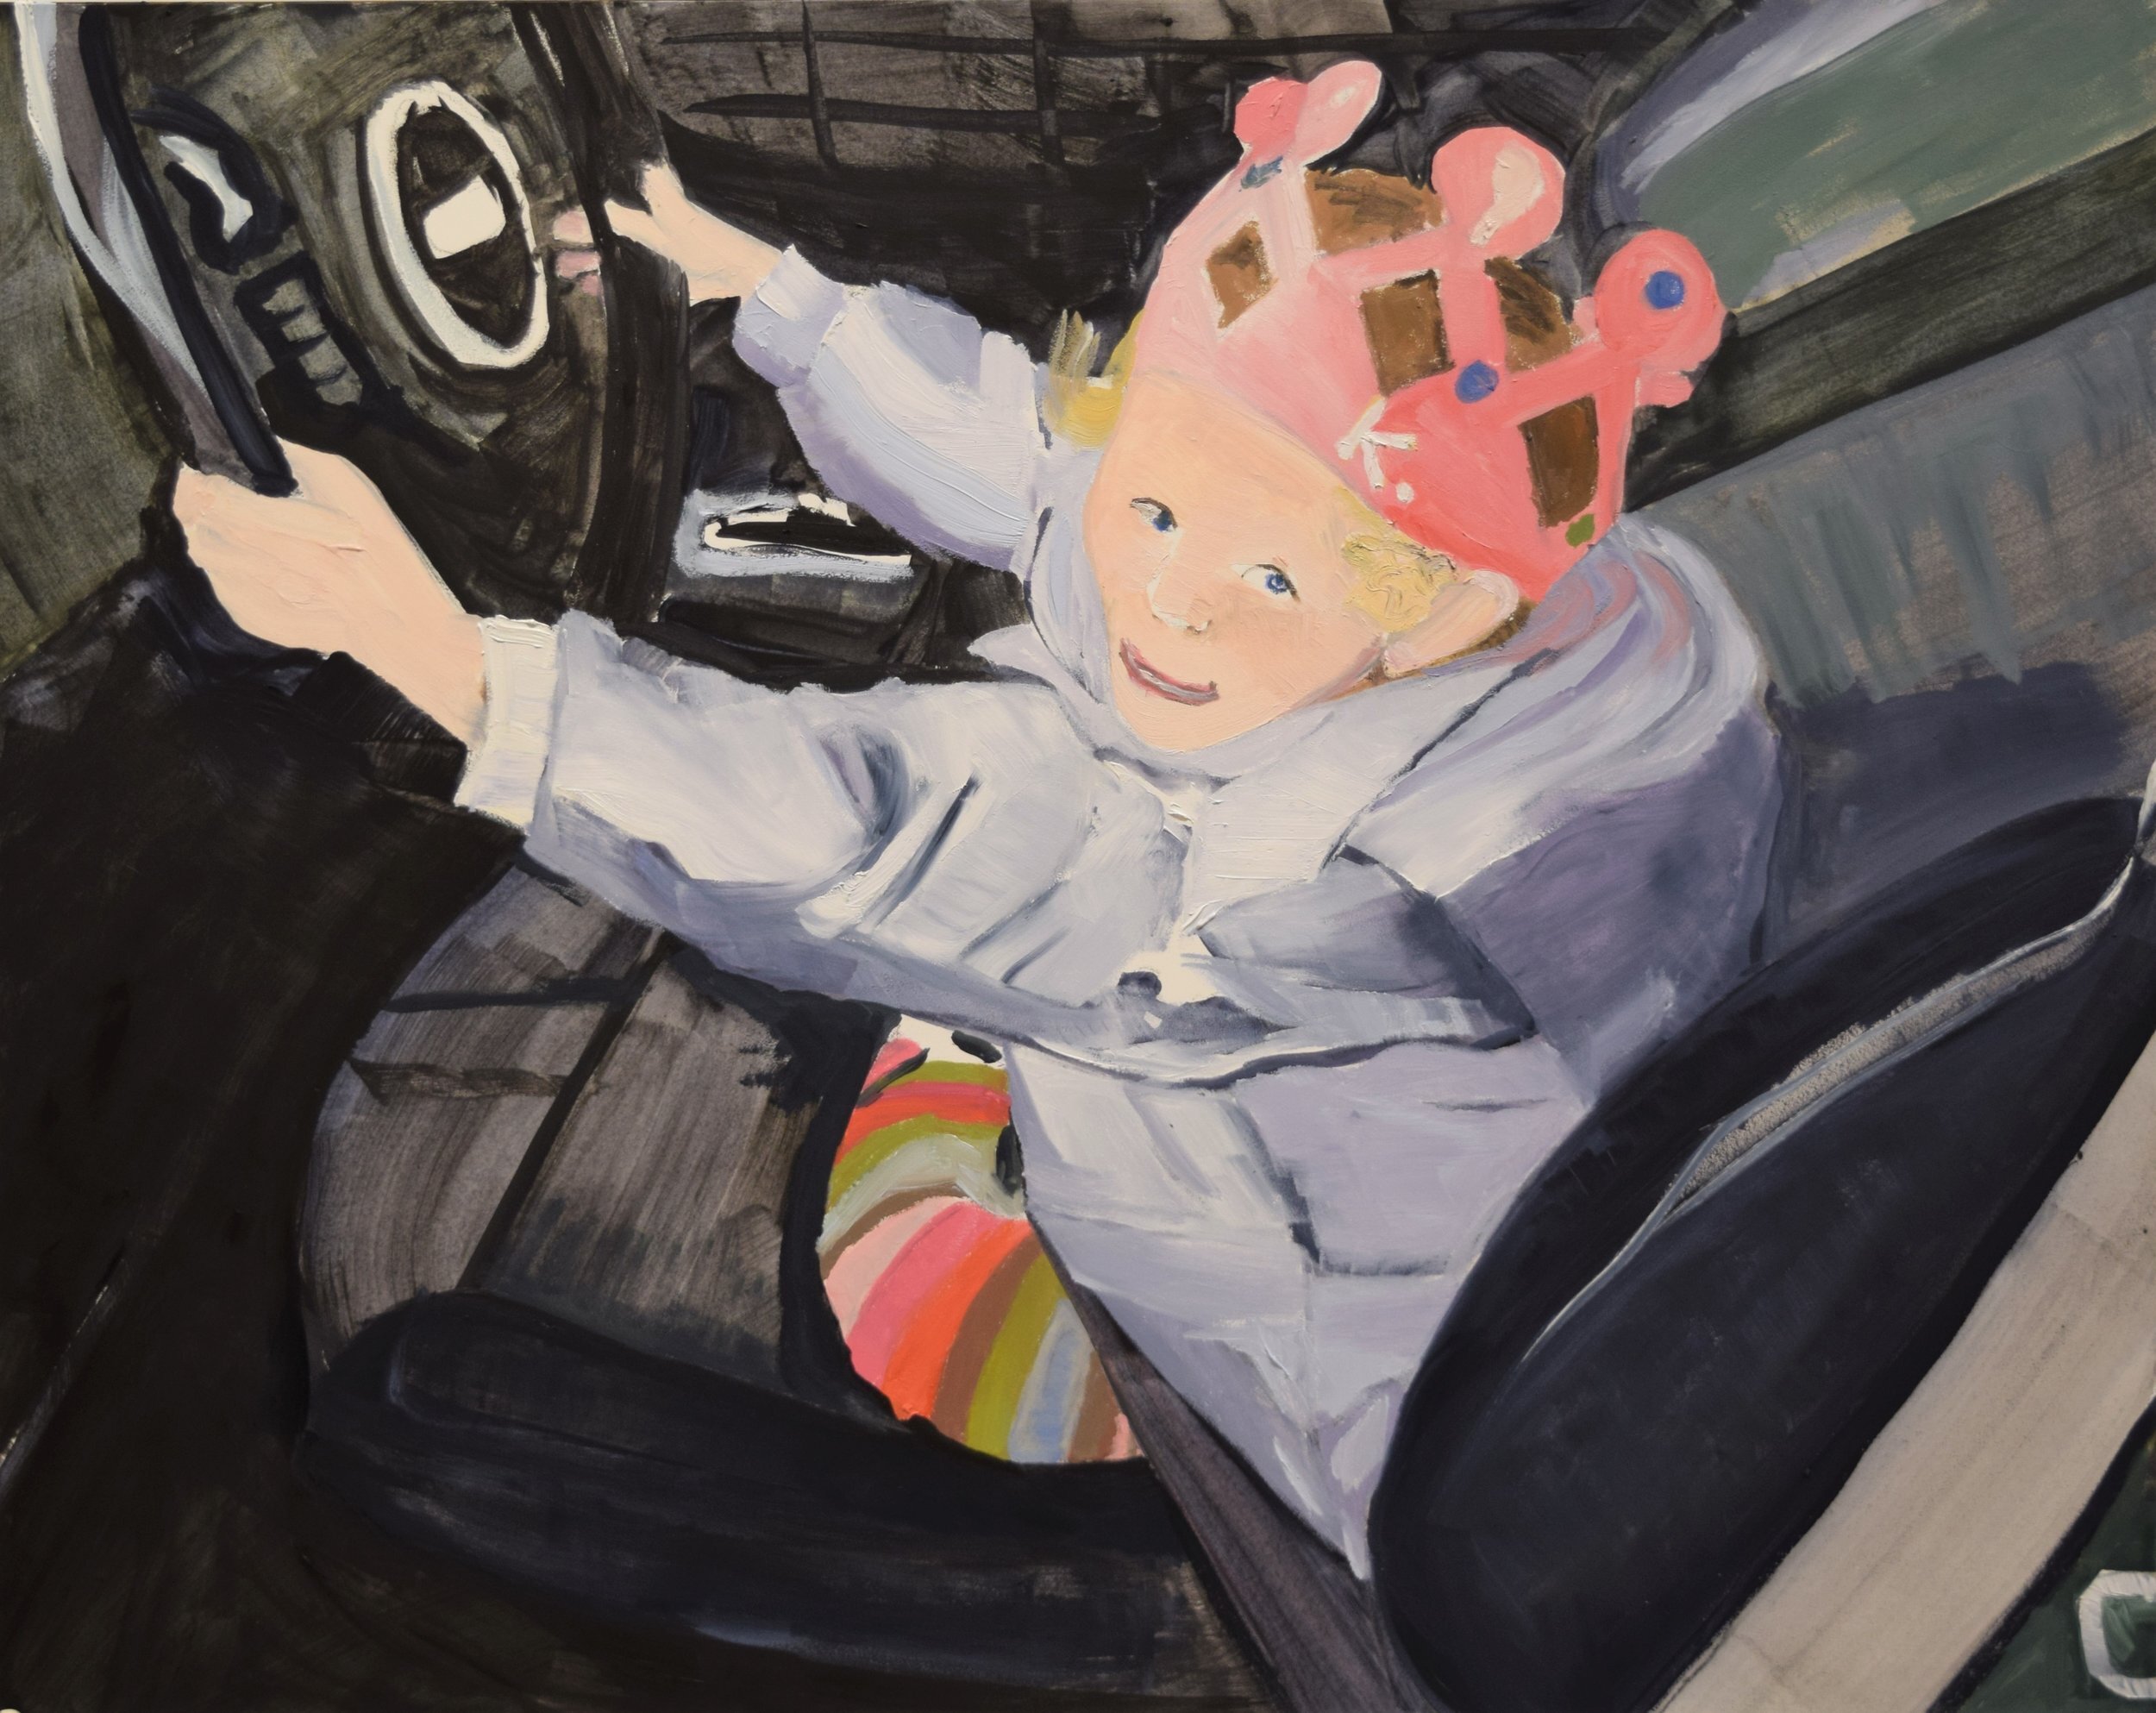 Heidi Hardin. 2018. KK in the Driver's Seat, Oil on panel, 16x20